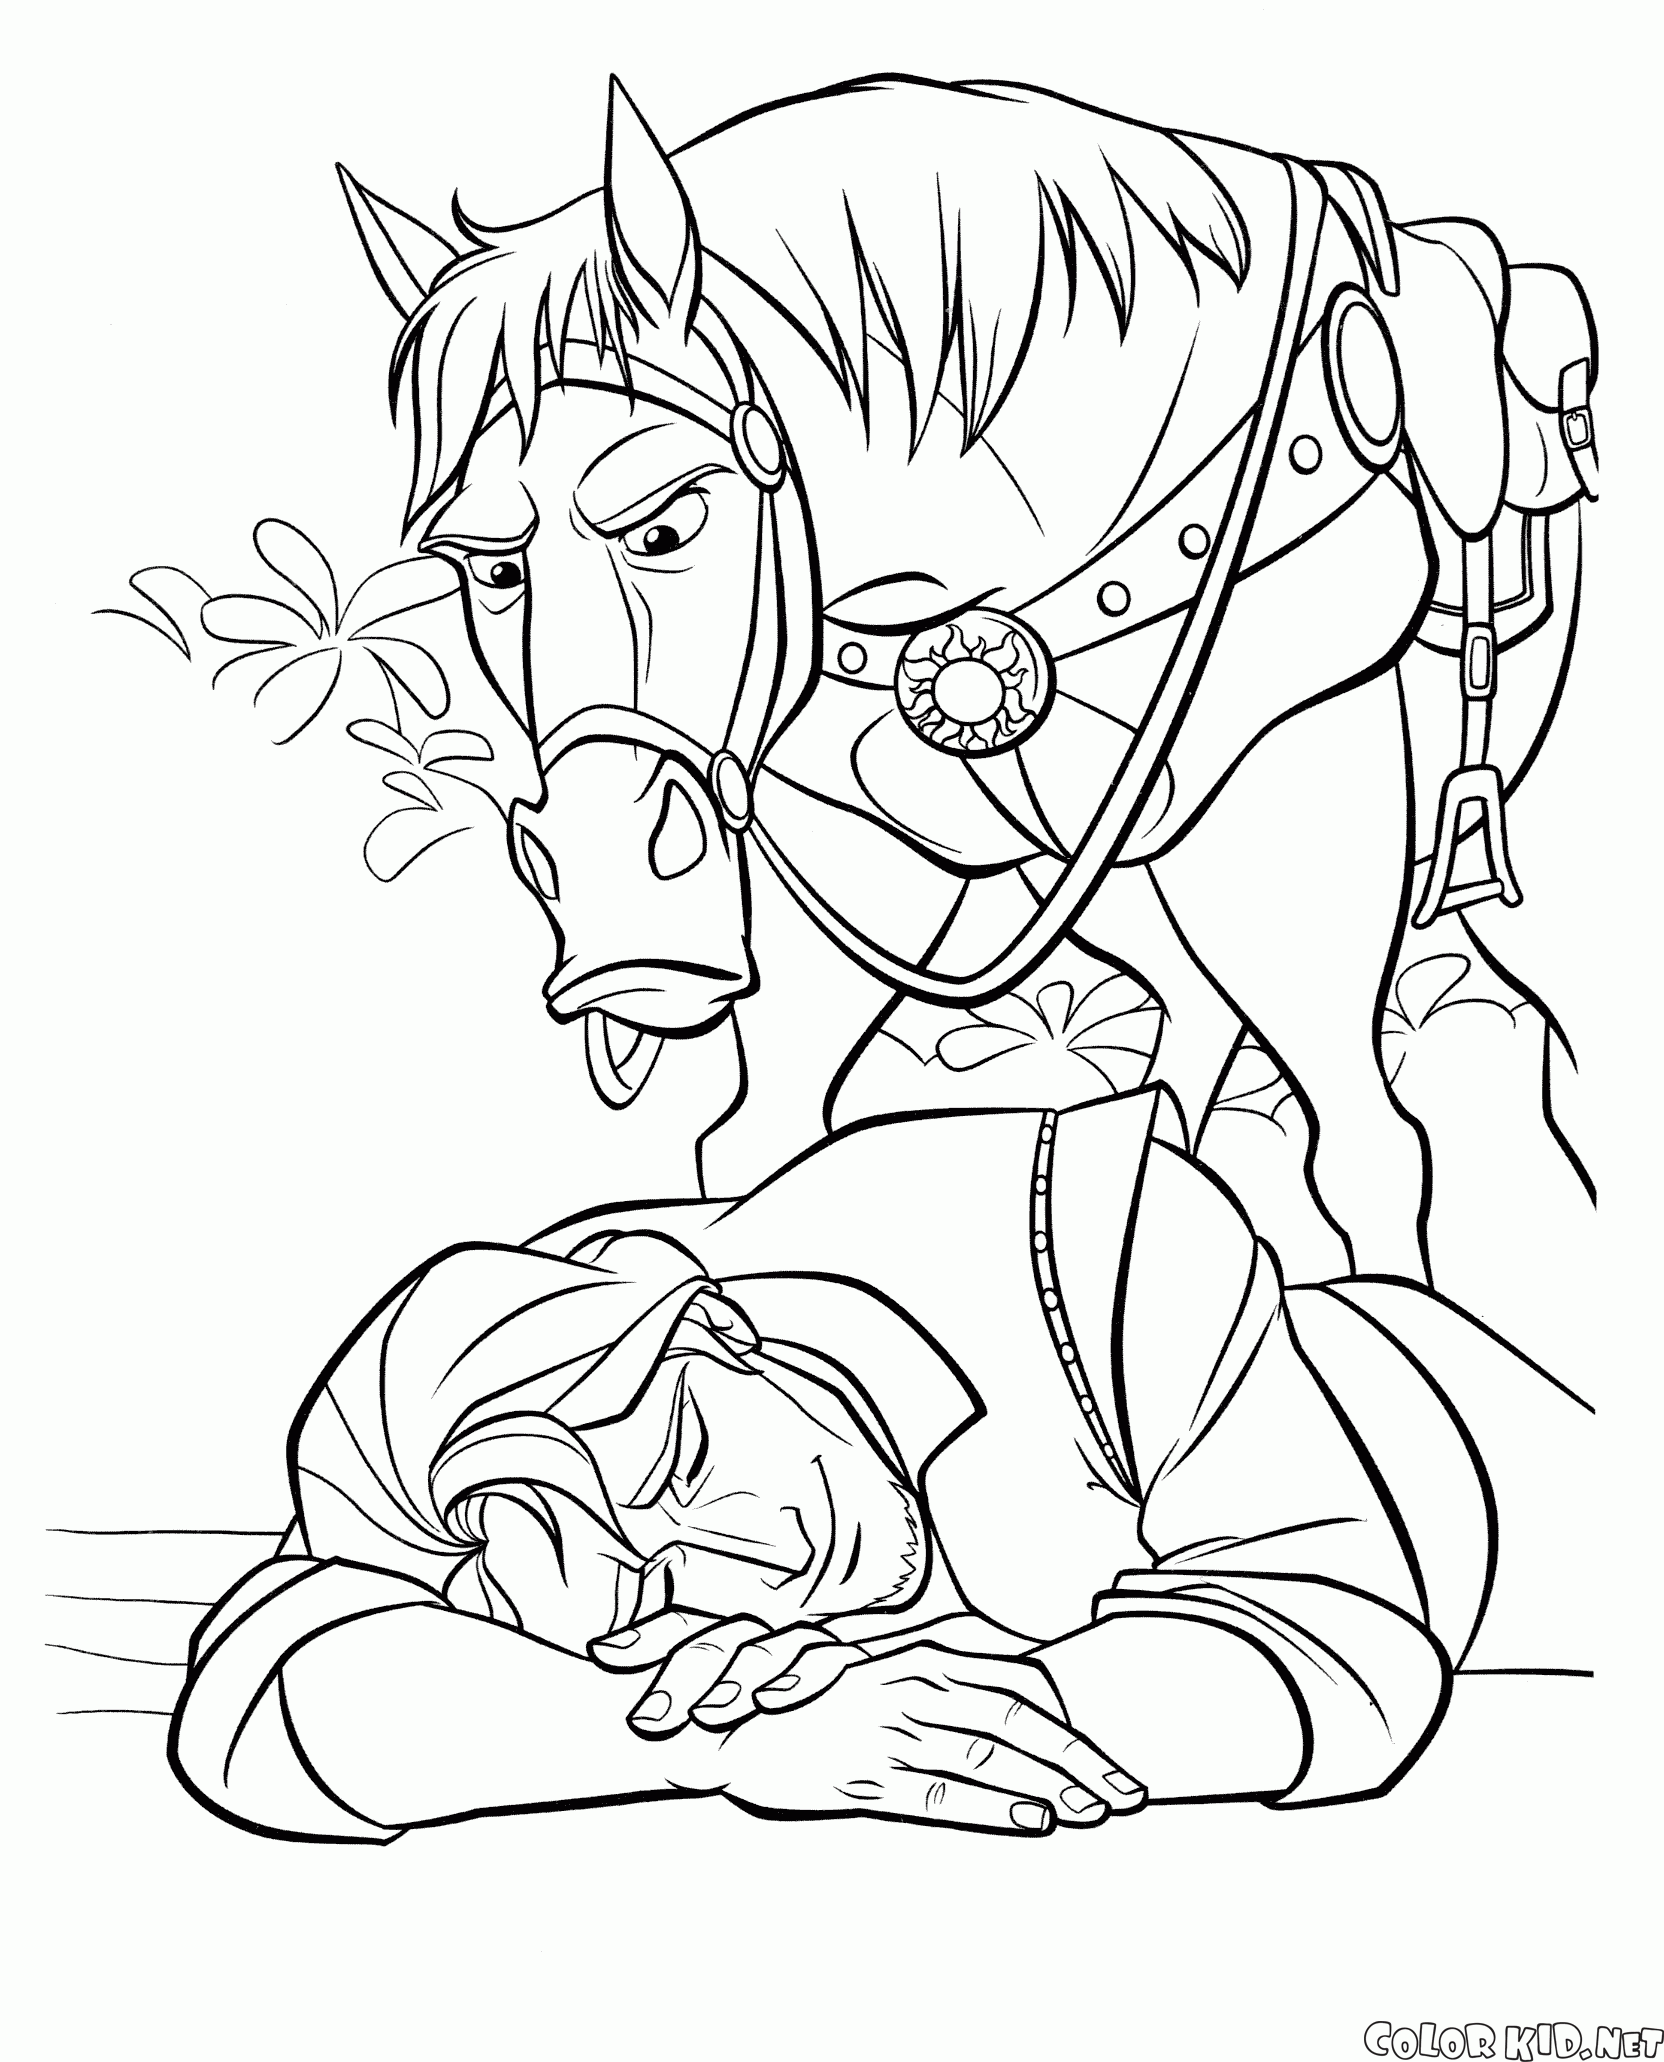 Horse and Flynn